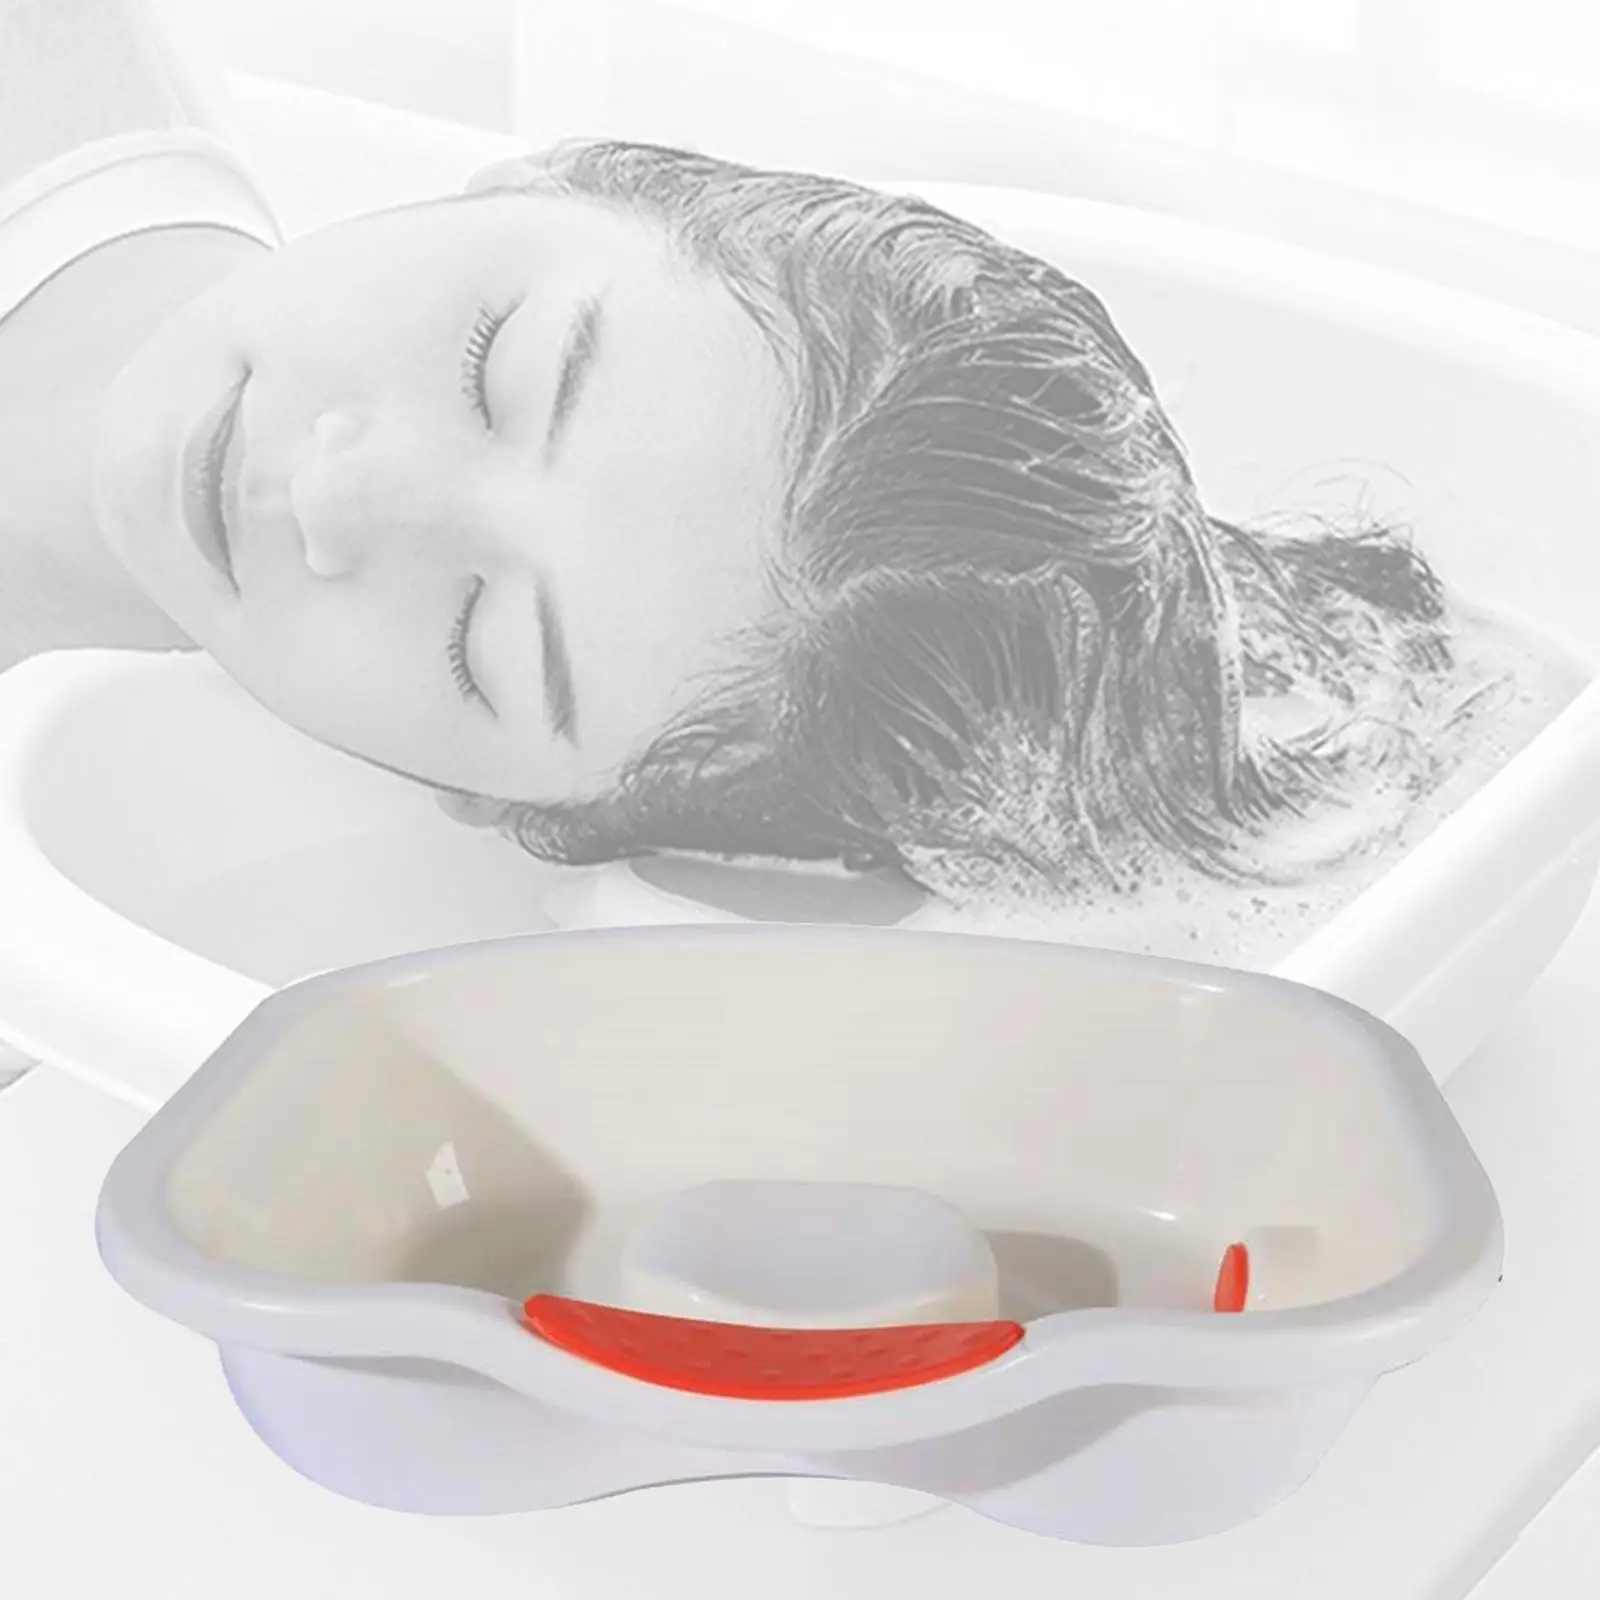 Easy Bed Shampoo Basin Hair Washing Basin Wash Tray with Drain Hose